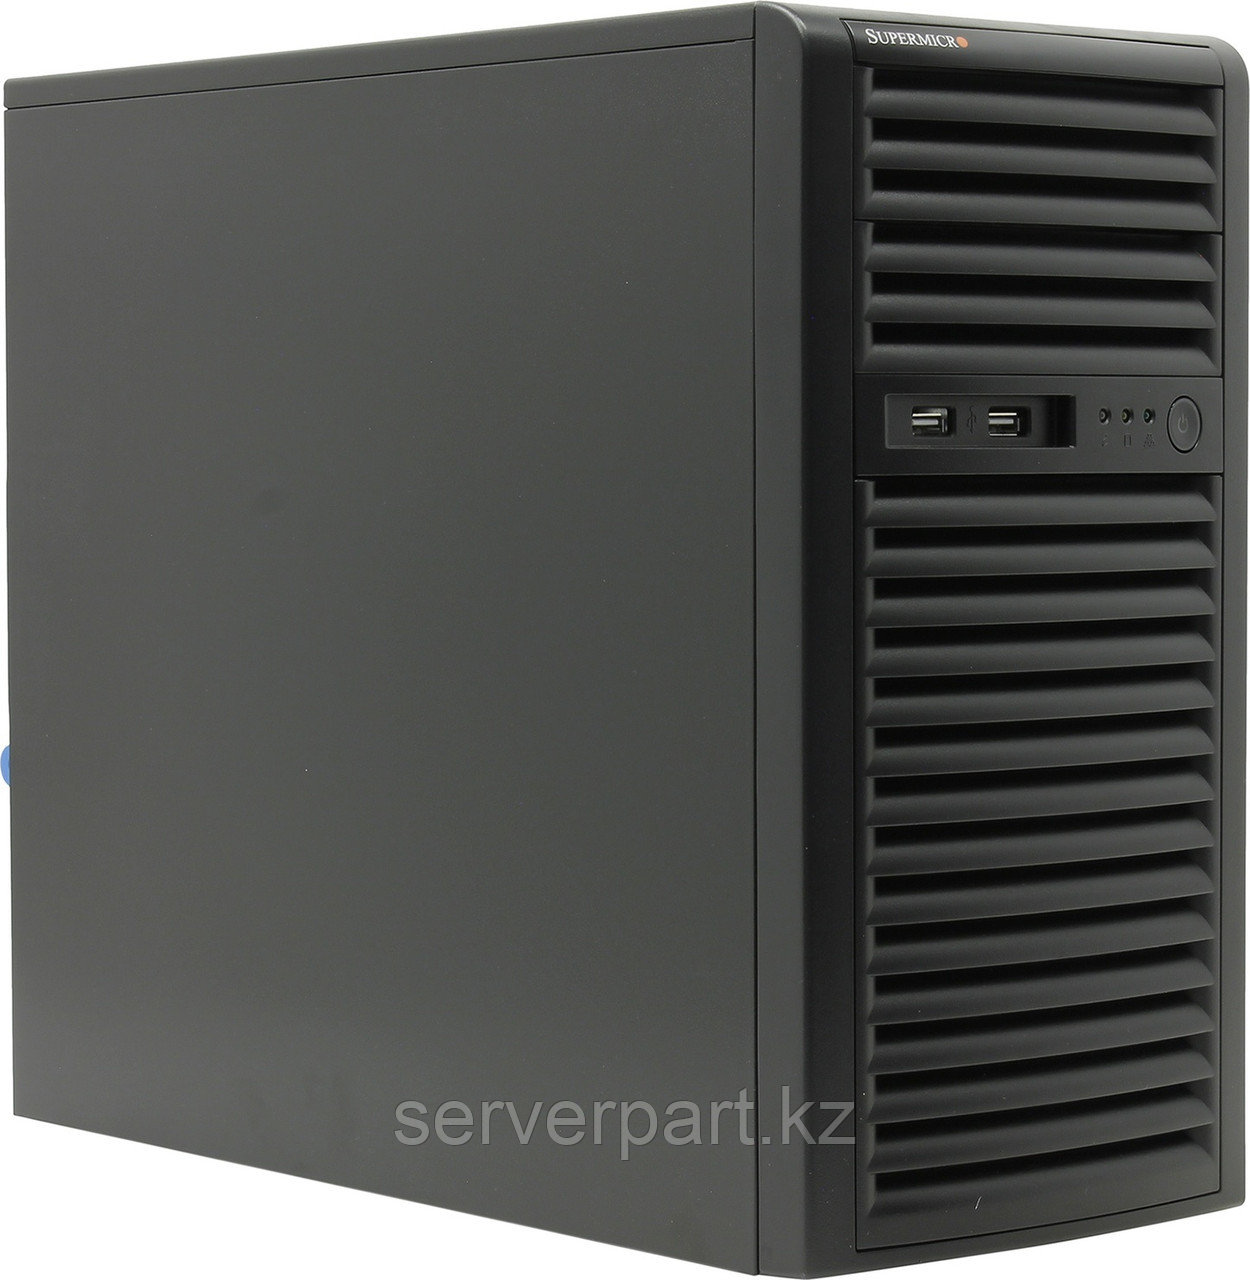 Сервер Supermicro SYS-5039D Tower/4-core intel xeon E3-1220v6 3GHz/48GB EUDIMM/1x480GB SSD RI Hyb